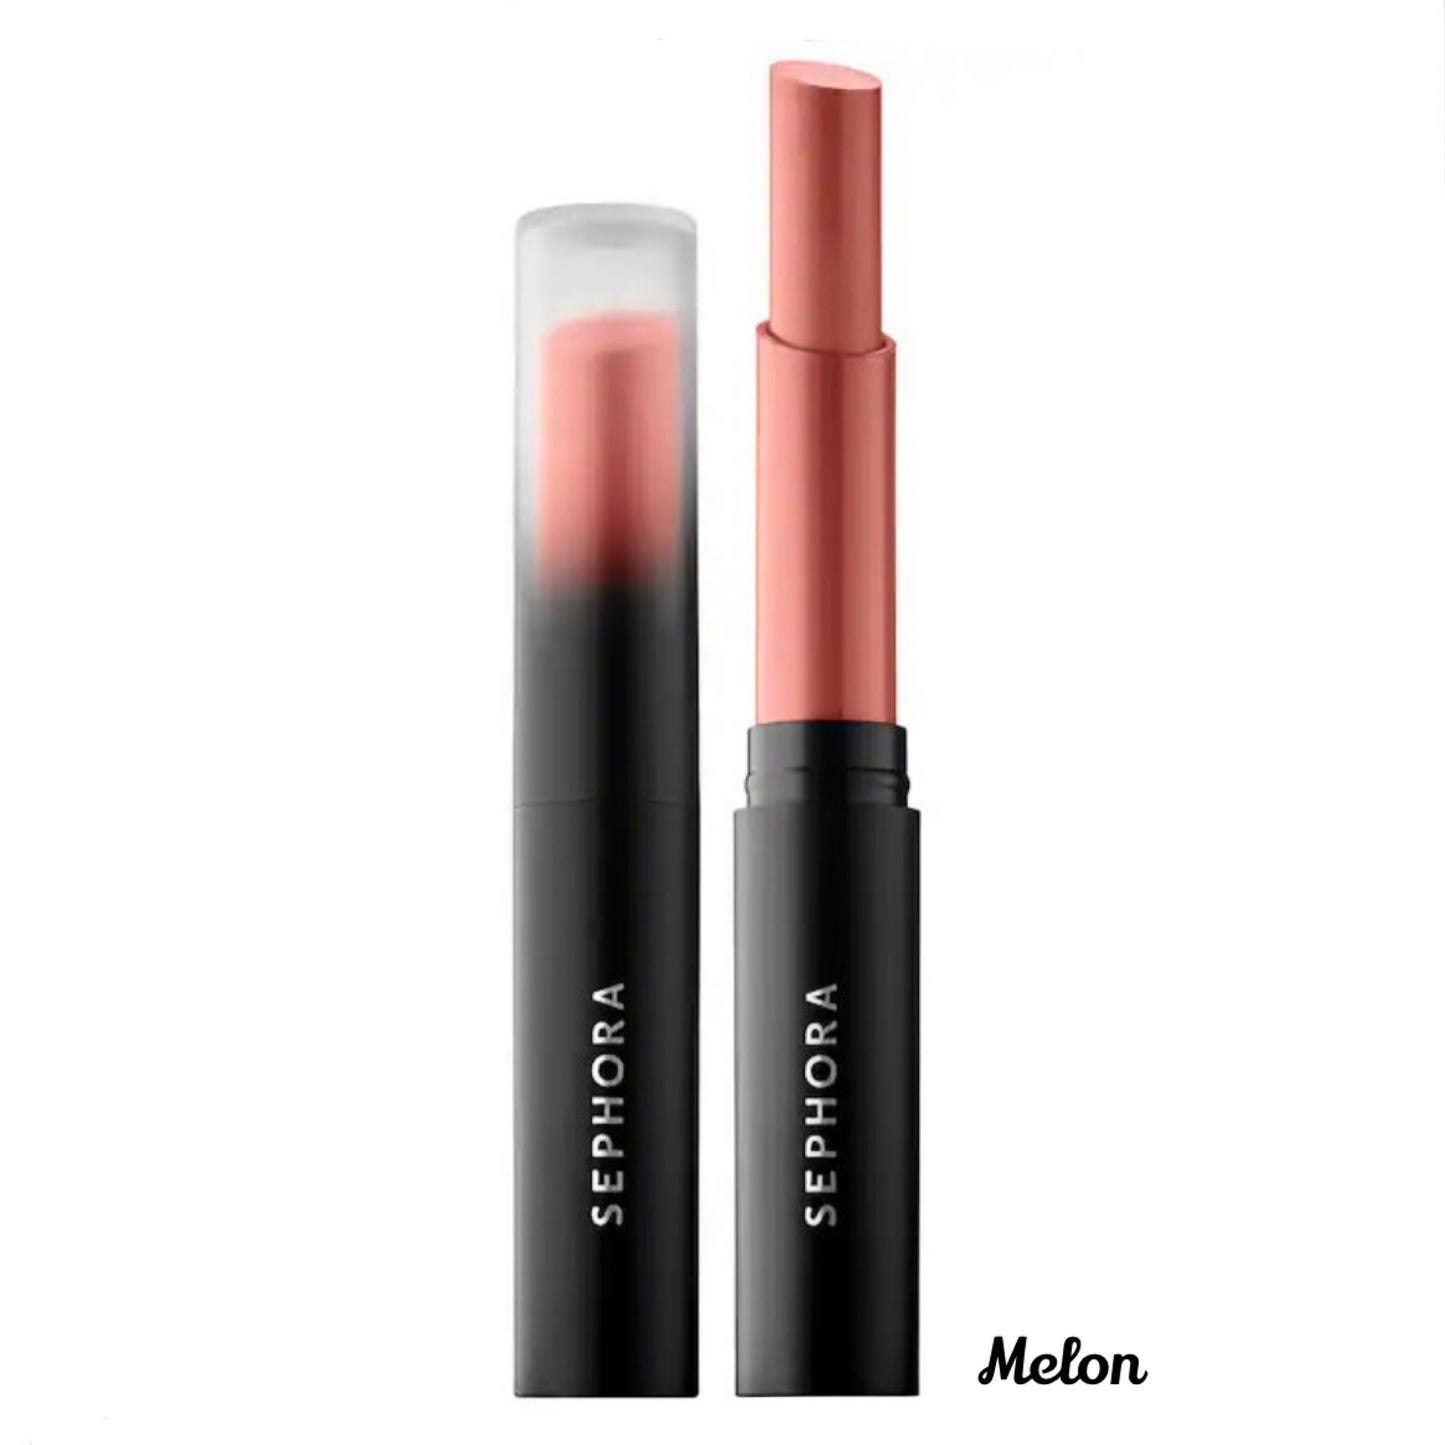 SEPHORA COLLECTION-Lip last matte lipstick